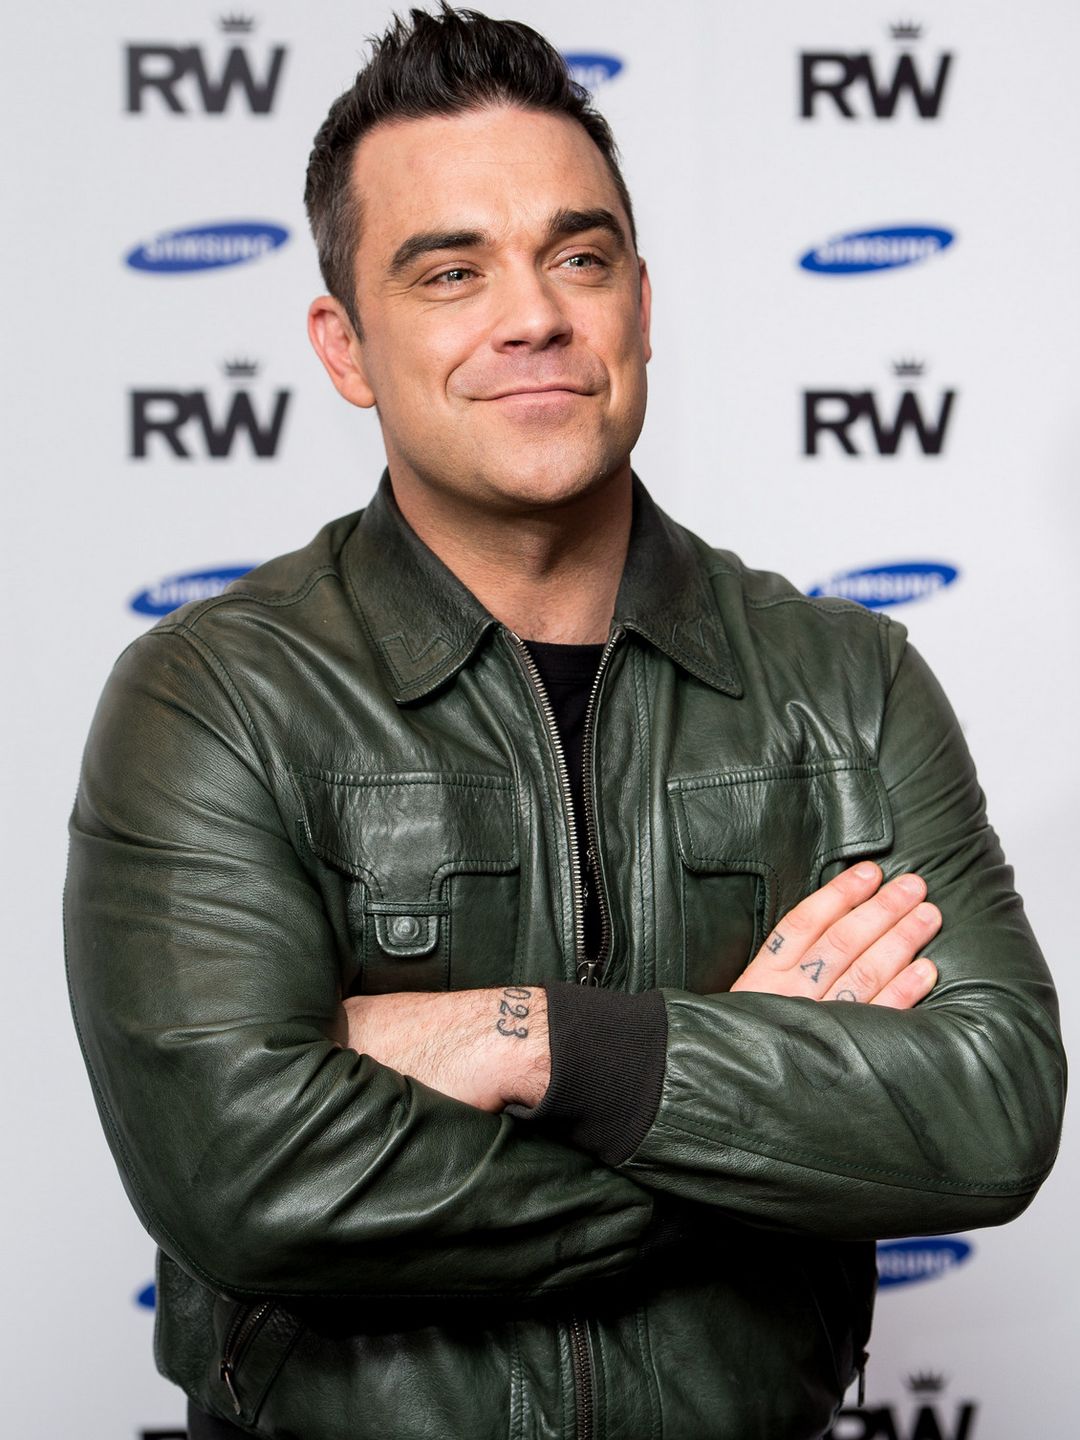 Robbie Williams biography